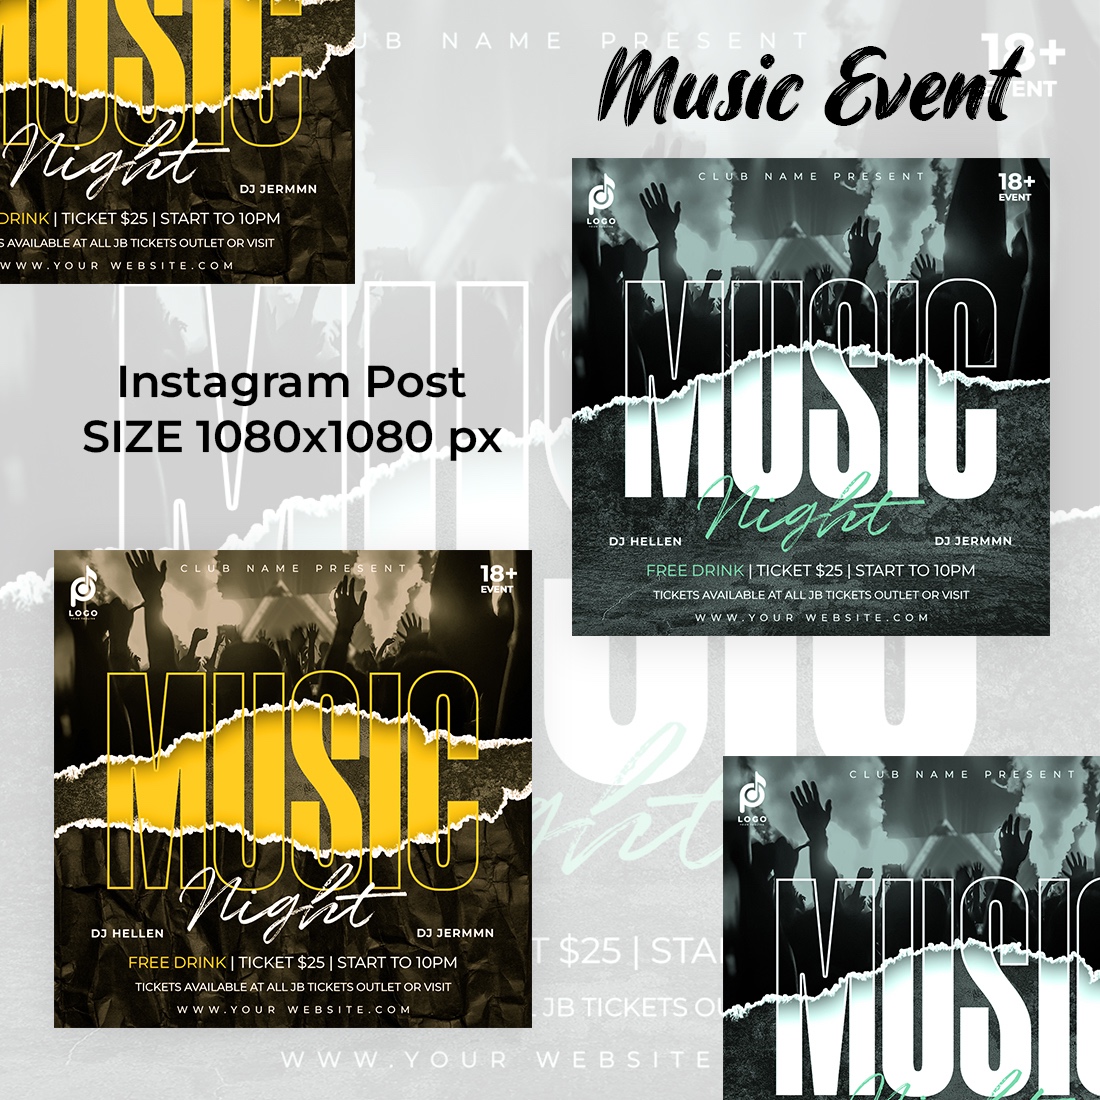 Music Event Instagram Post Design cover image.